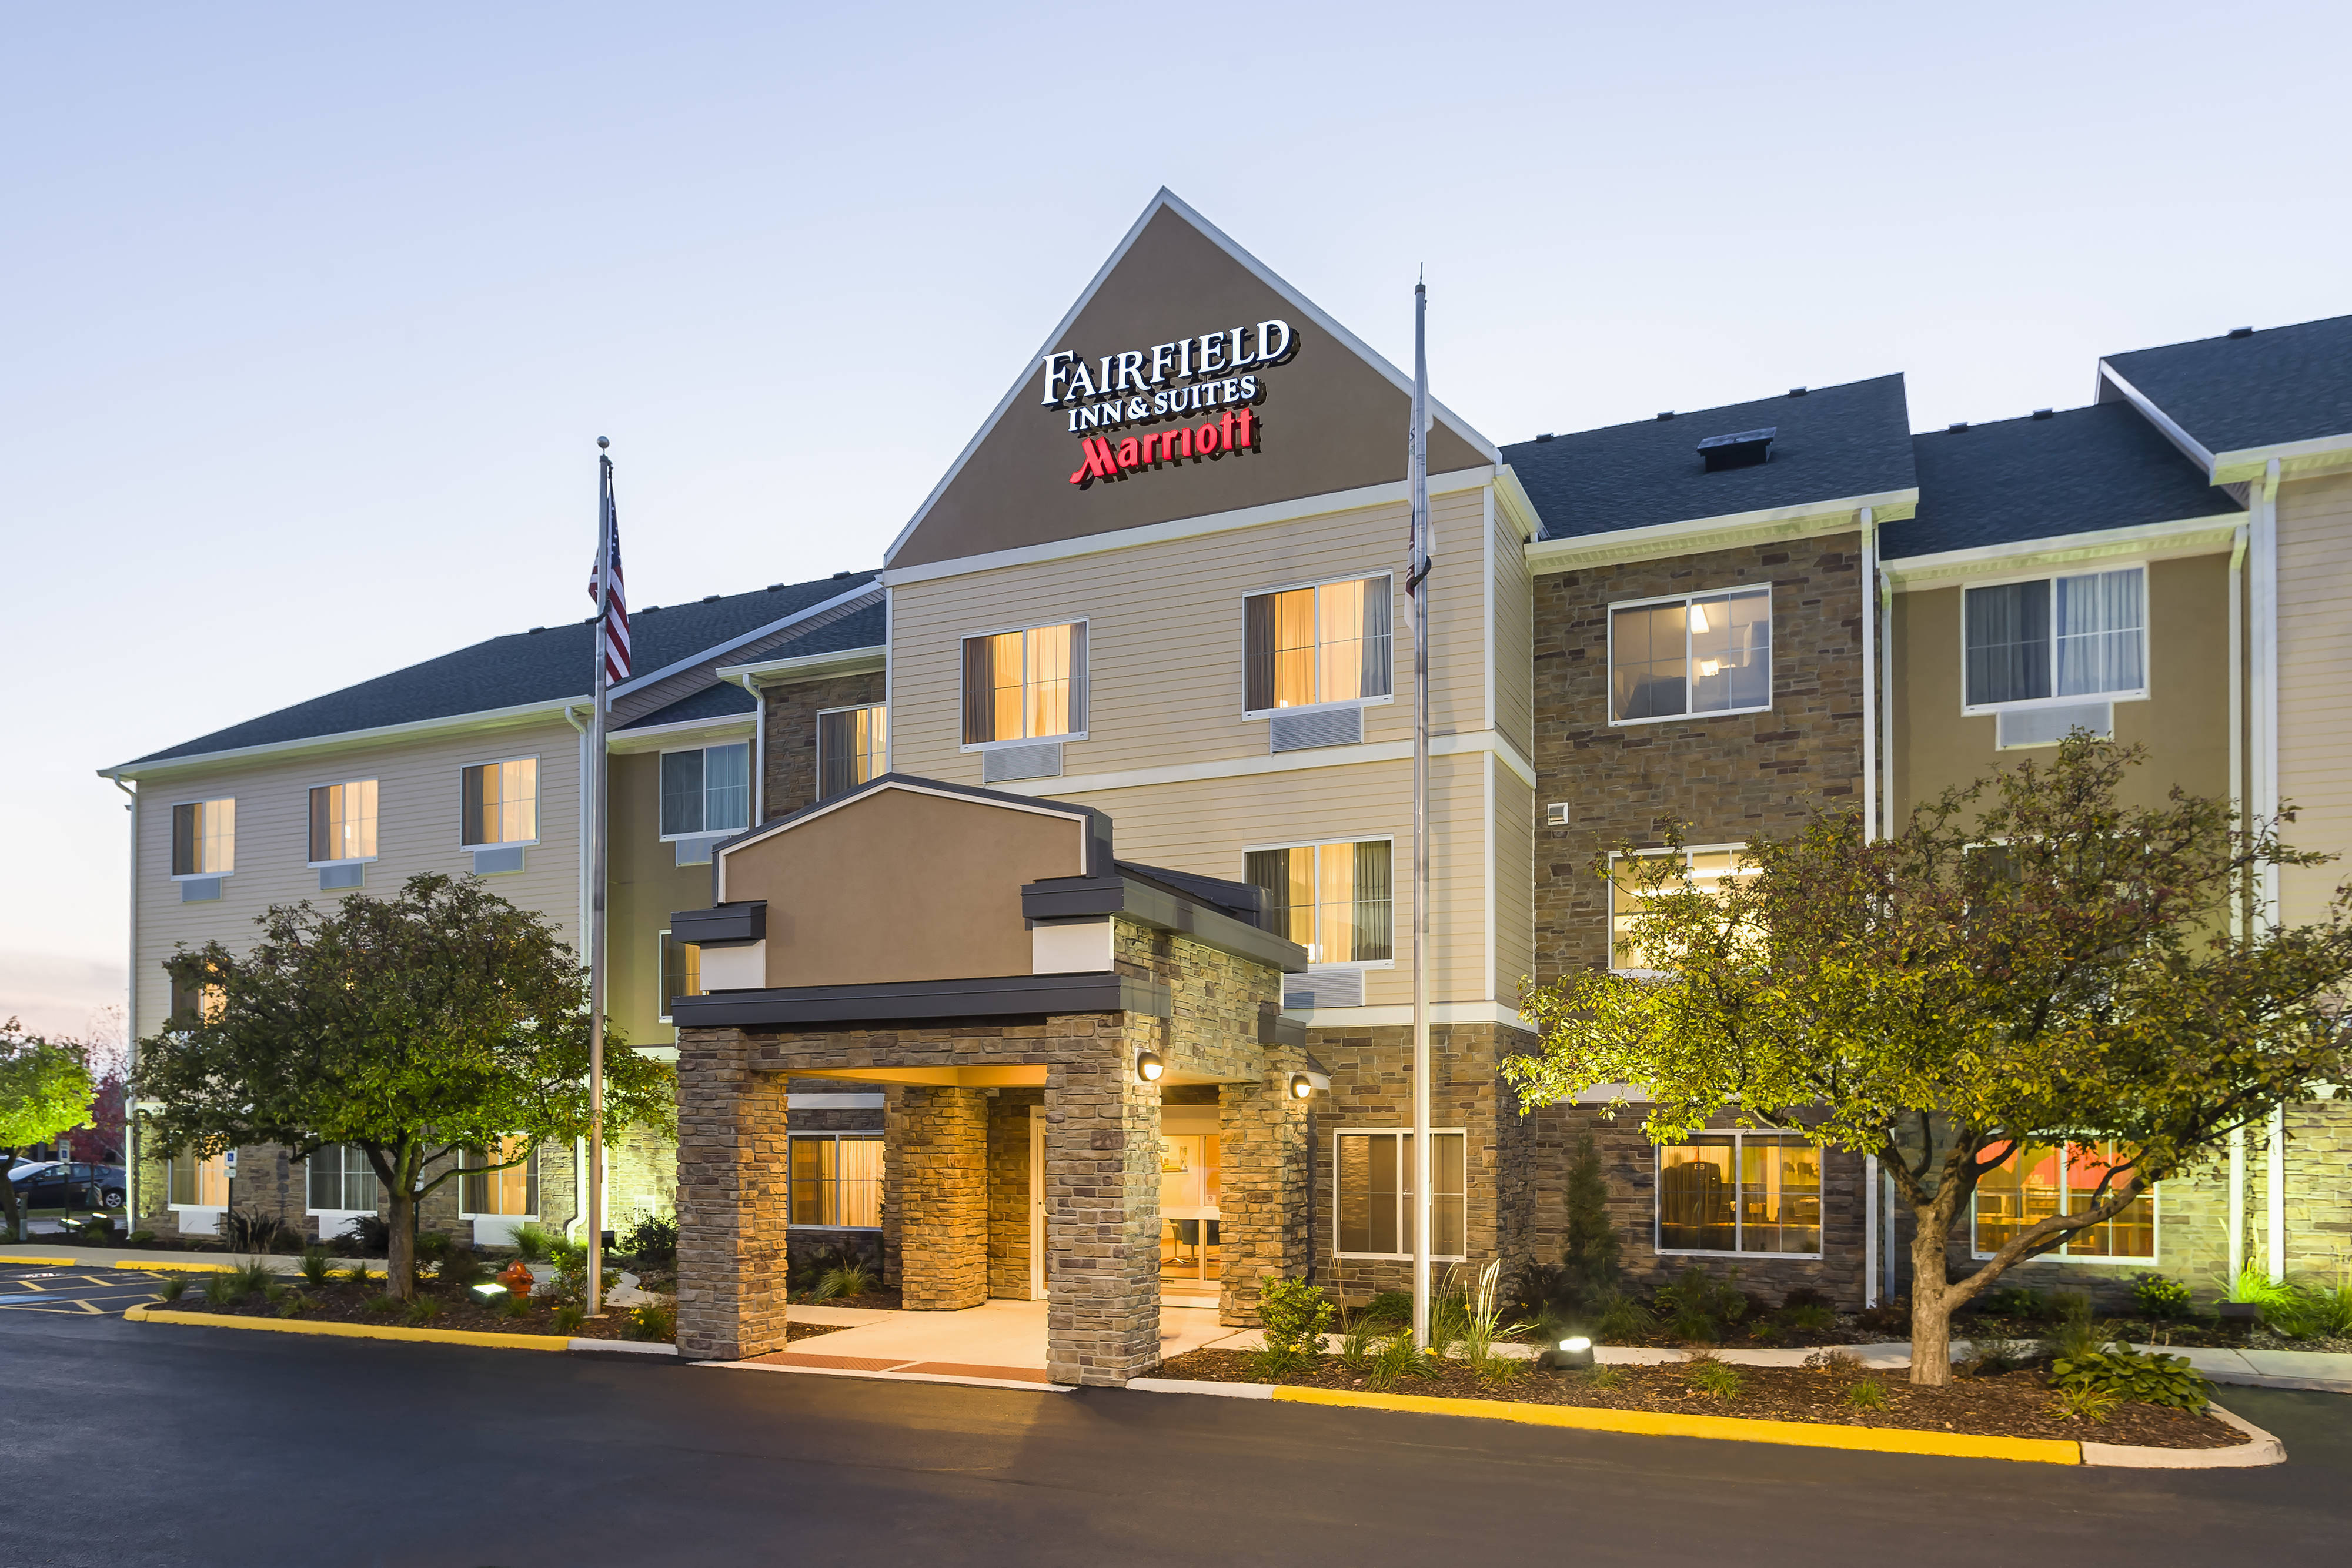 Photo of Fairfield Inn & Suites by Marriott Chicago Naperville/Aurora, Naperville, IL